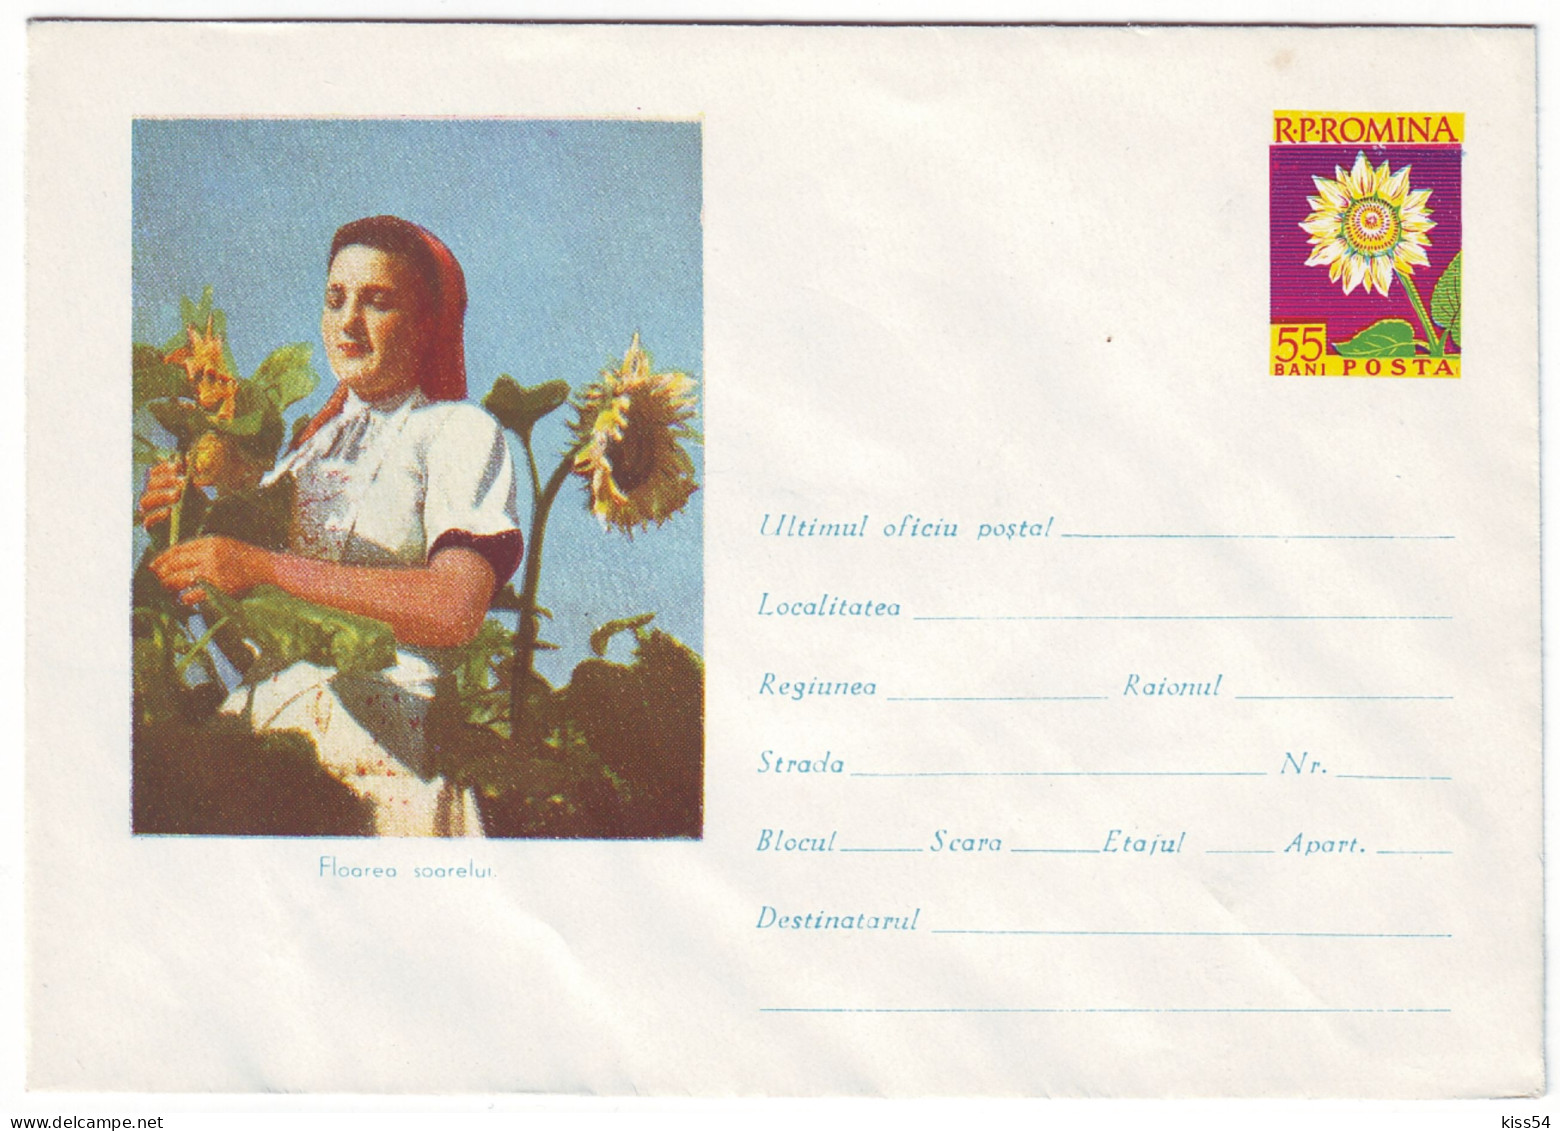 IP 61 - 495d AGRICULTURE & SUN FLOWER, Romania - Stationery - Unused - 1961 - Ganzsachen